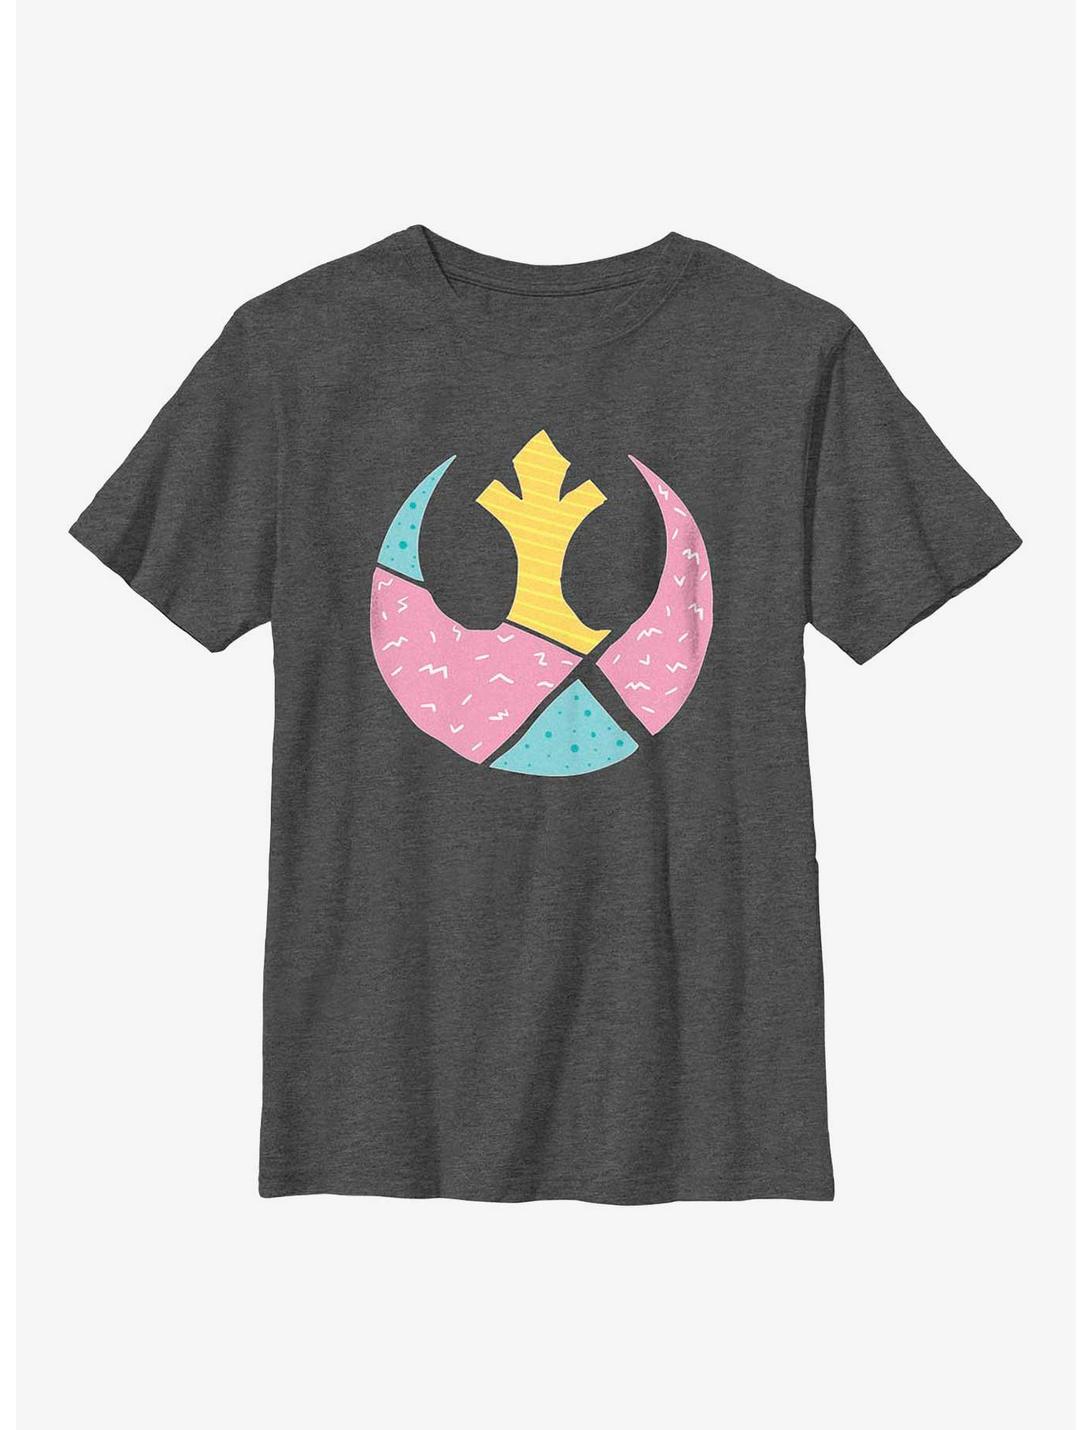 Star Wars Geometric Shaped Rebel Symbol Youth T-Shirt, CHAR HTR, hi-res